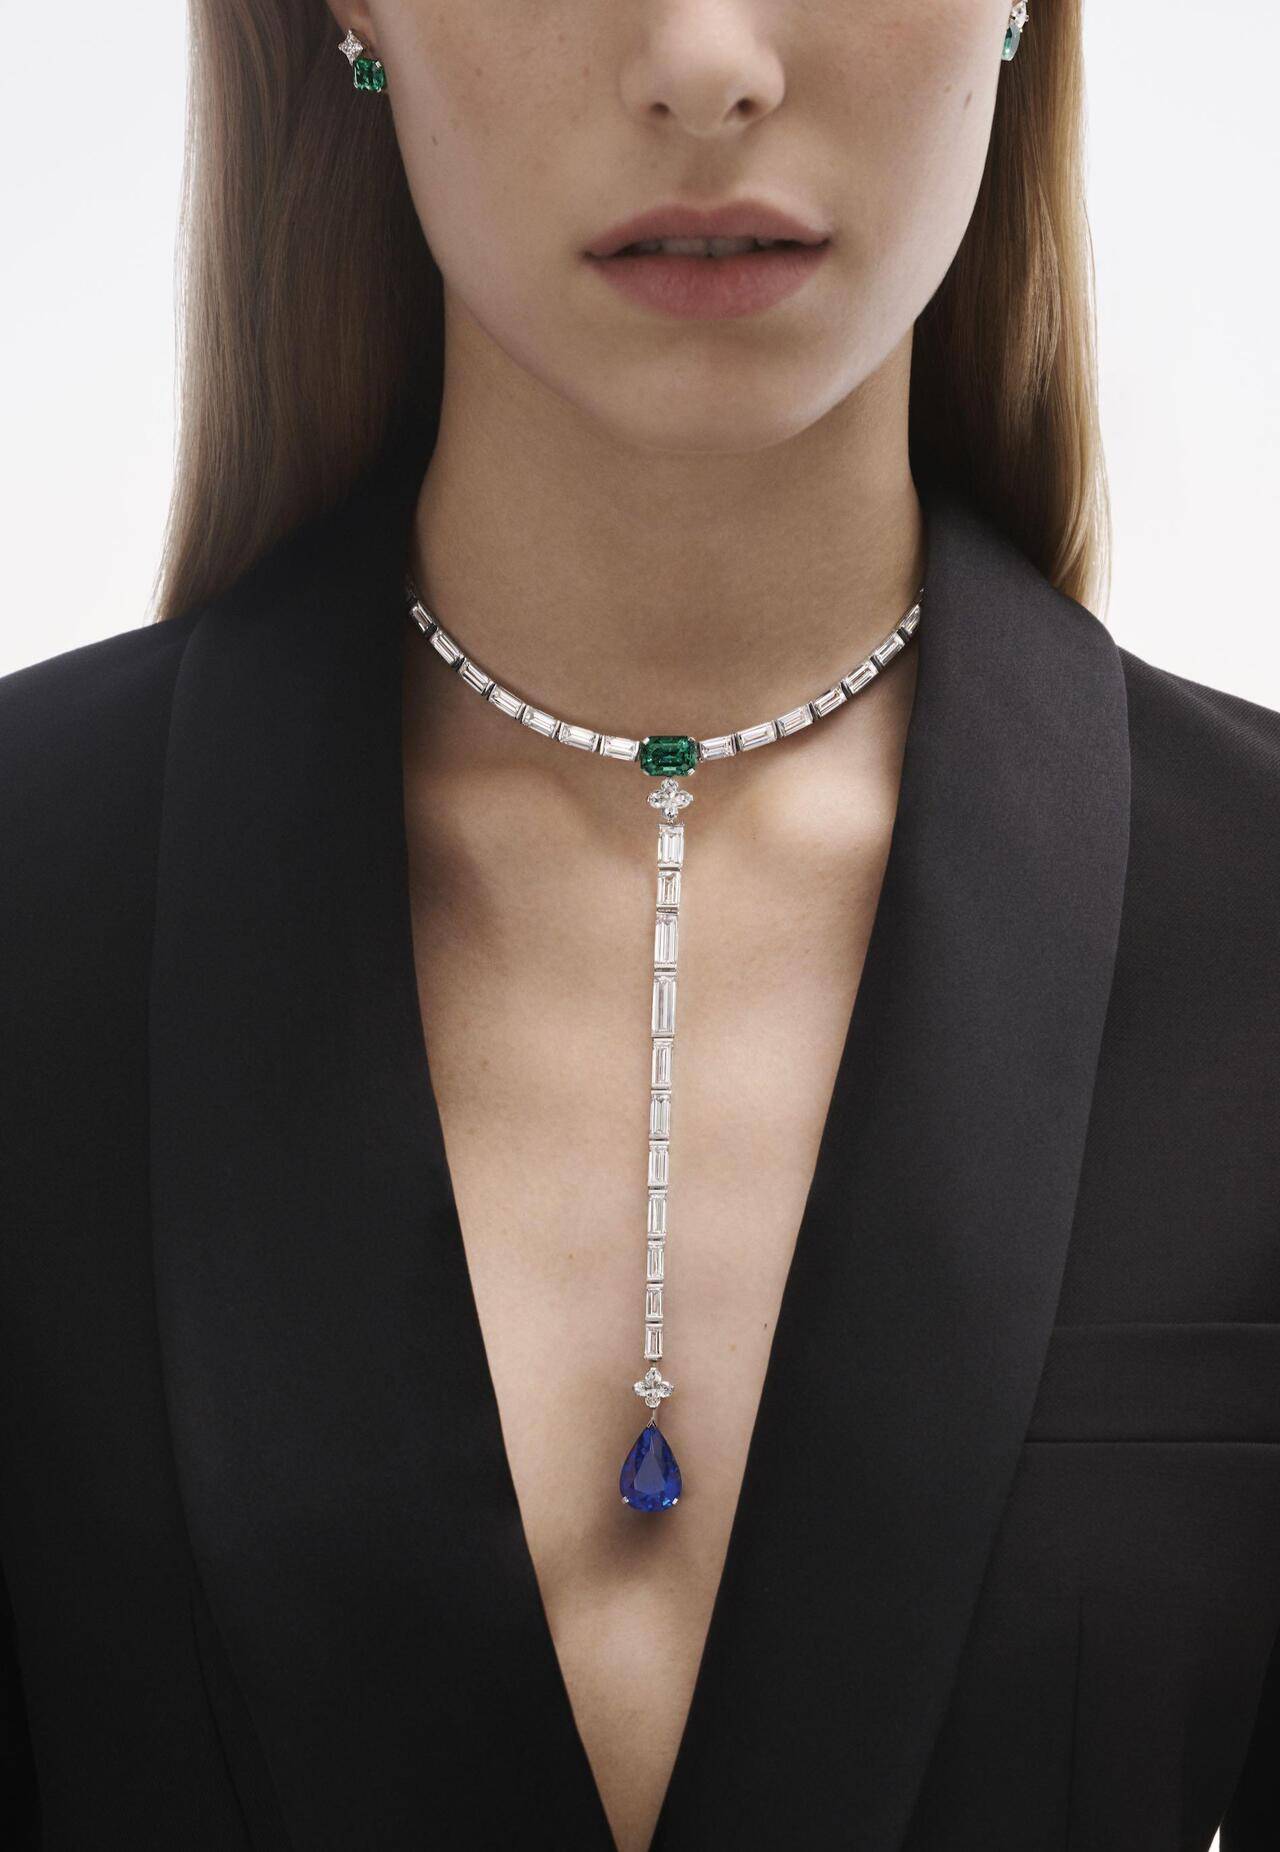 Louis Vuitton: Fantastical Jewels By Francesca Amfitheatrof - Luxferity